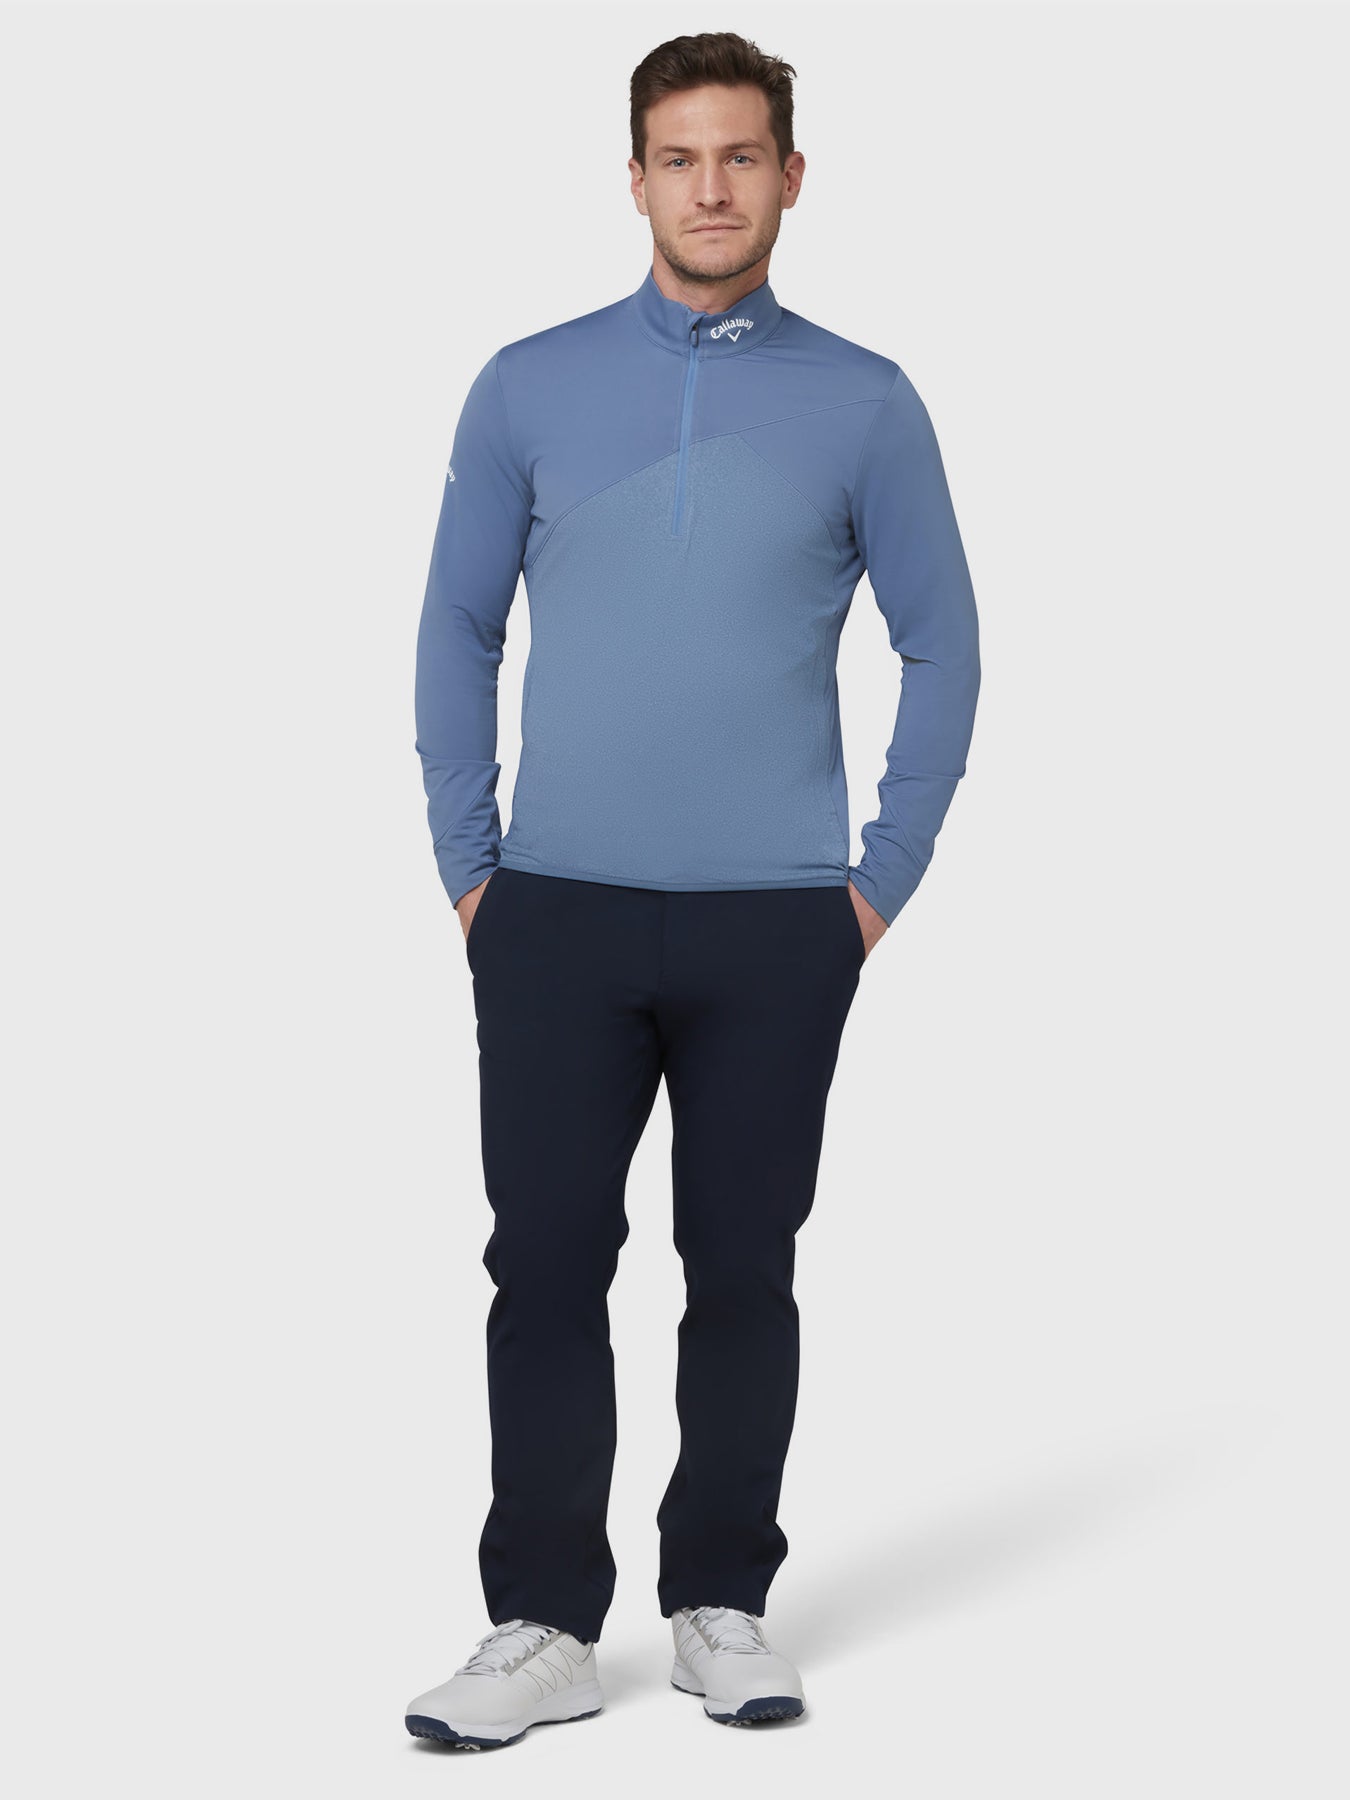 View Aquapel Ultra Light Quarter Zip Sweatshirt In Blue Horizon information